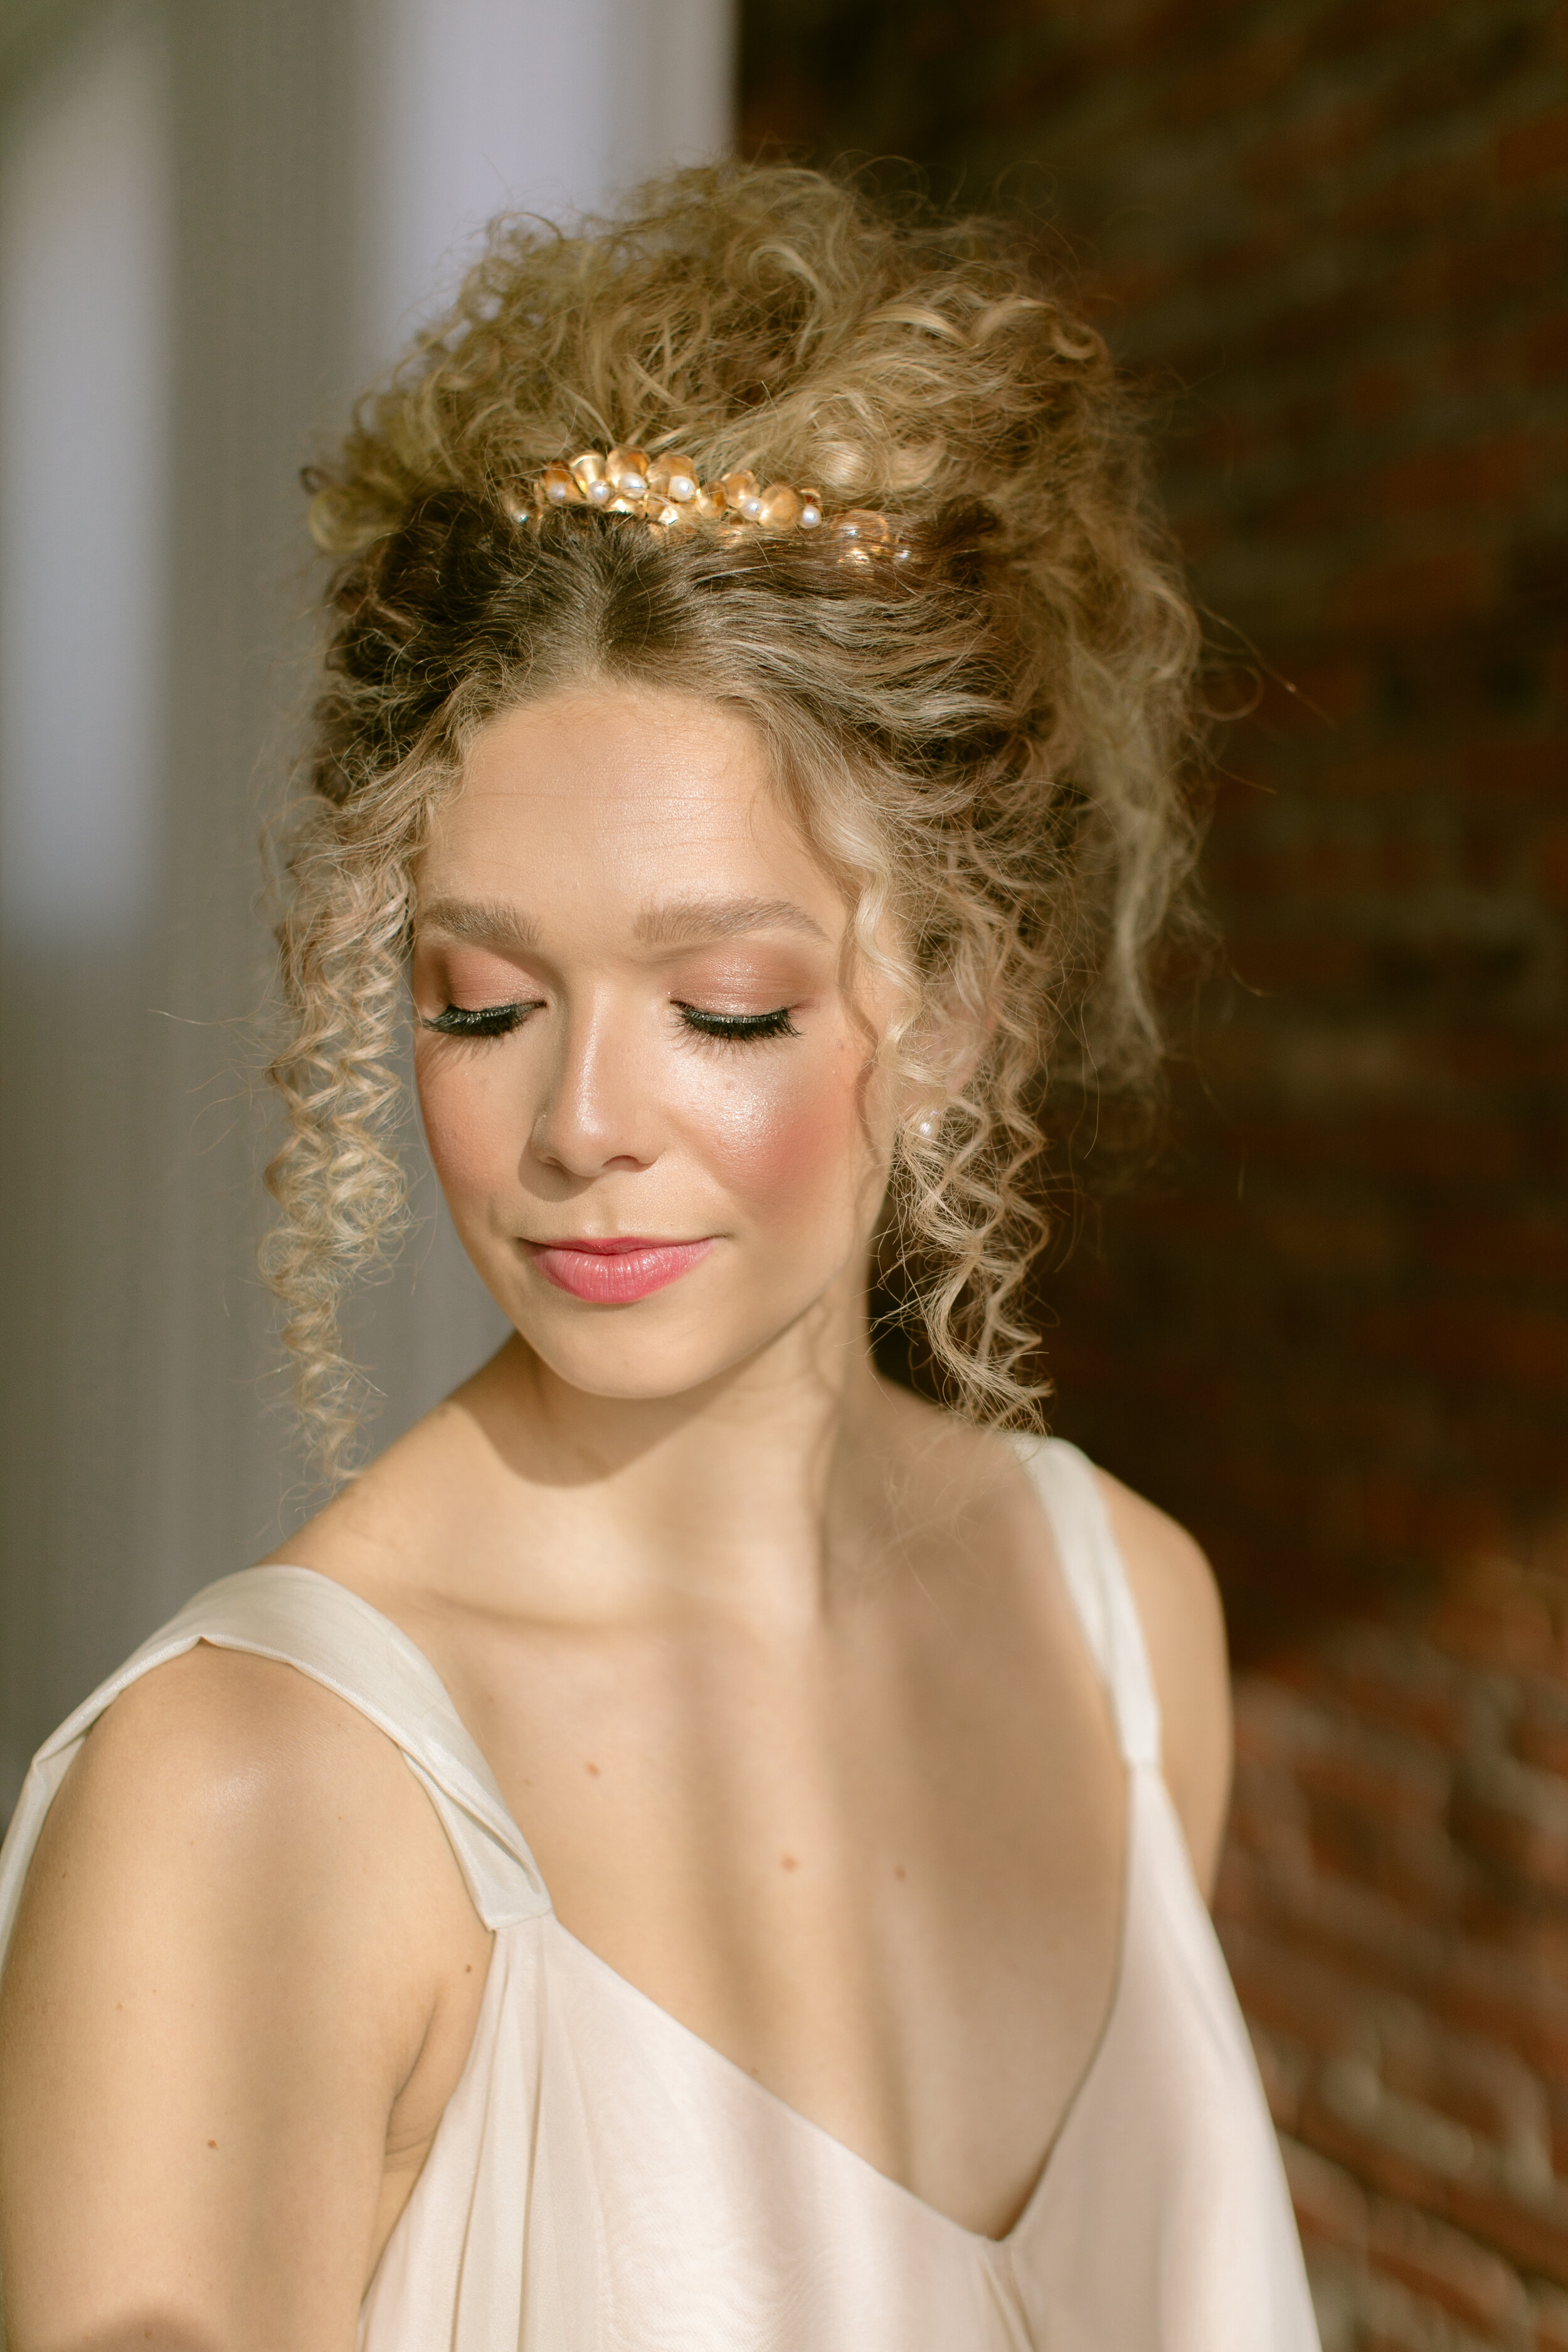 Bridal Style Wedding Gown Inspiration - Venue308 Bronte Bride Blog Feature